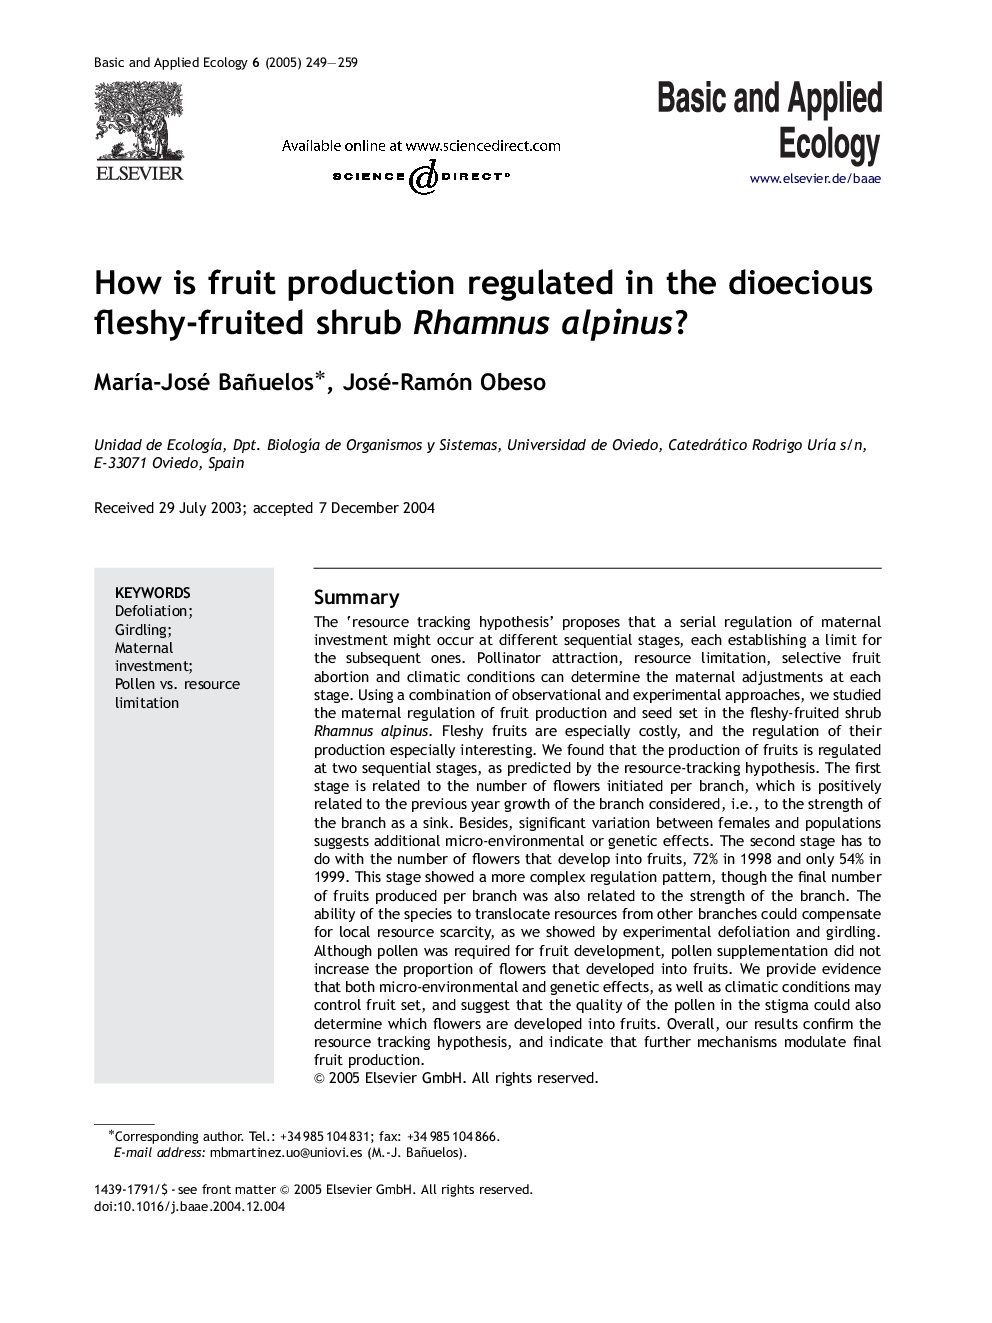 How is fruit production regulated in the dioecious fleshy-fruited shrub Rhamnus alpinus?